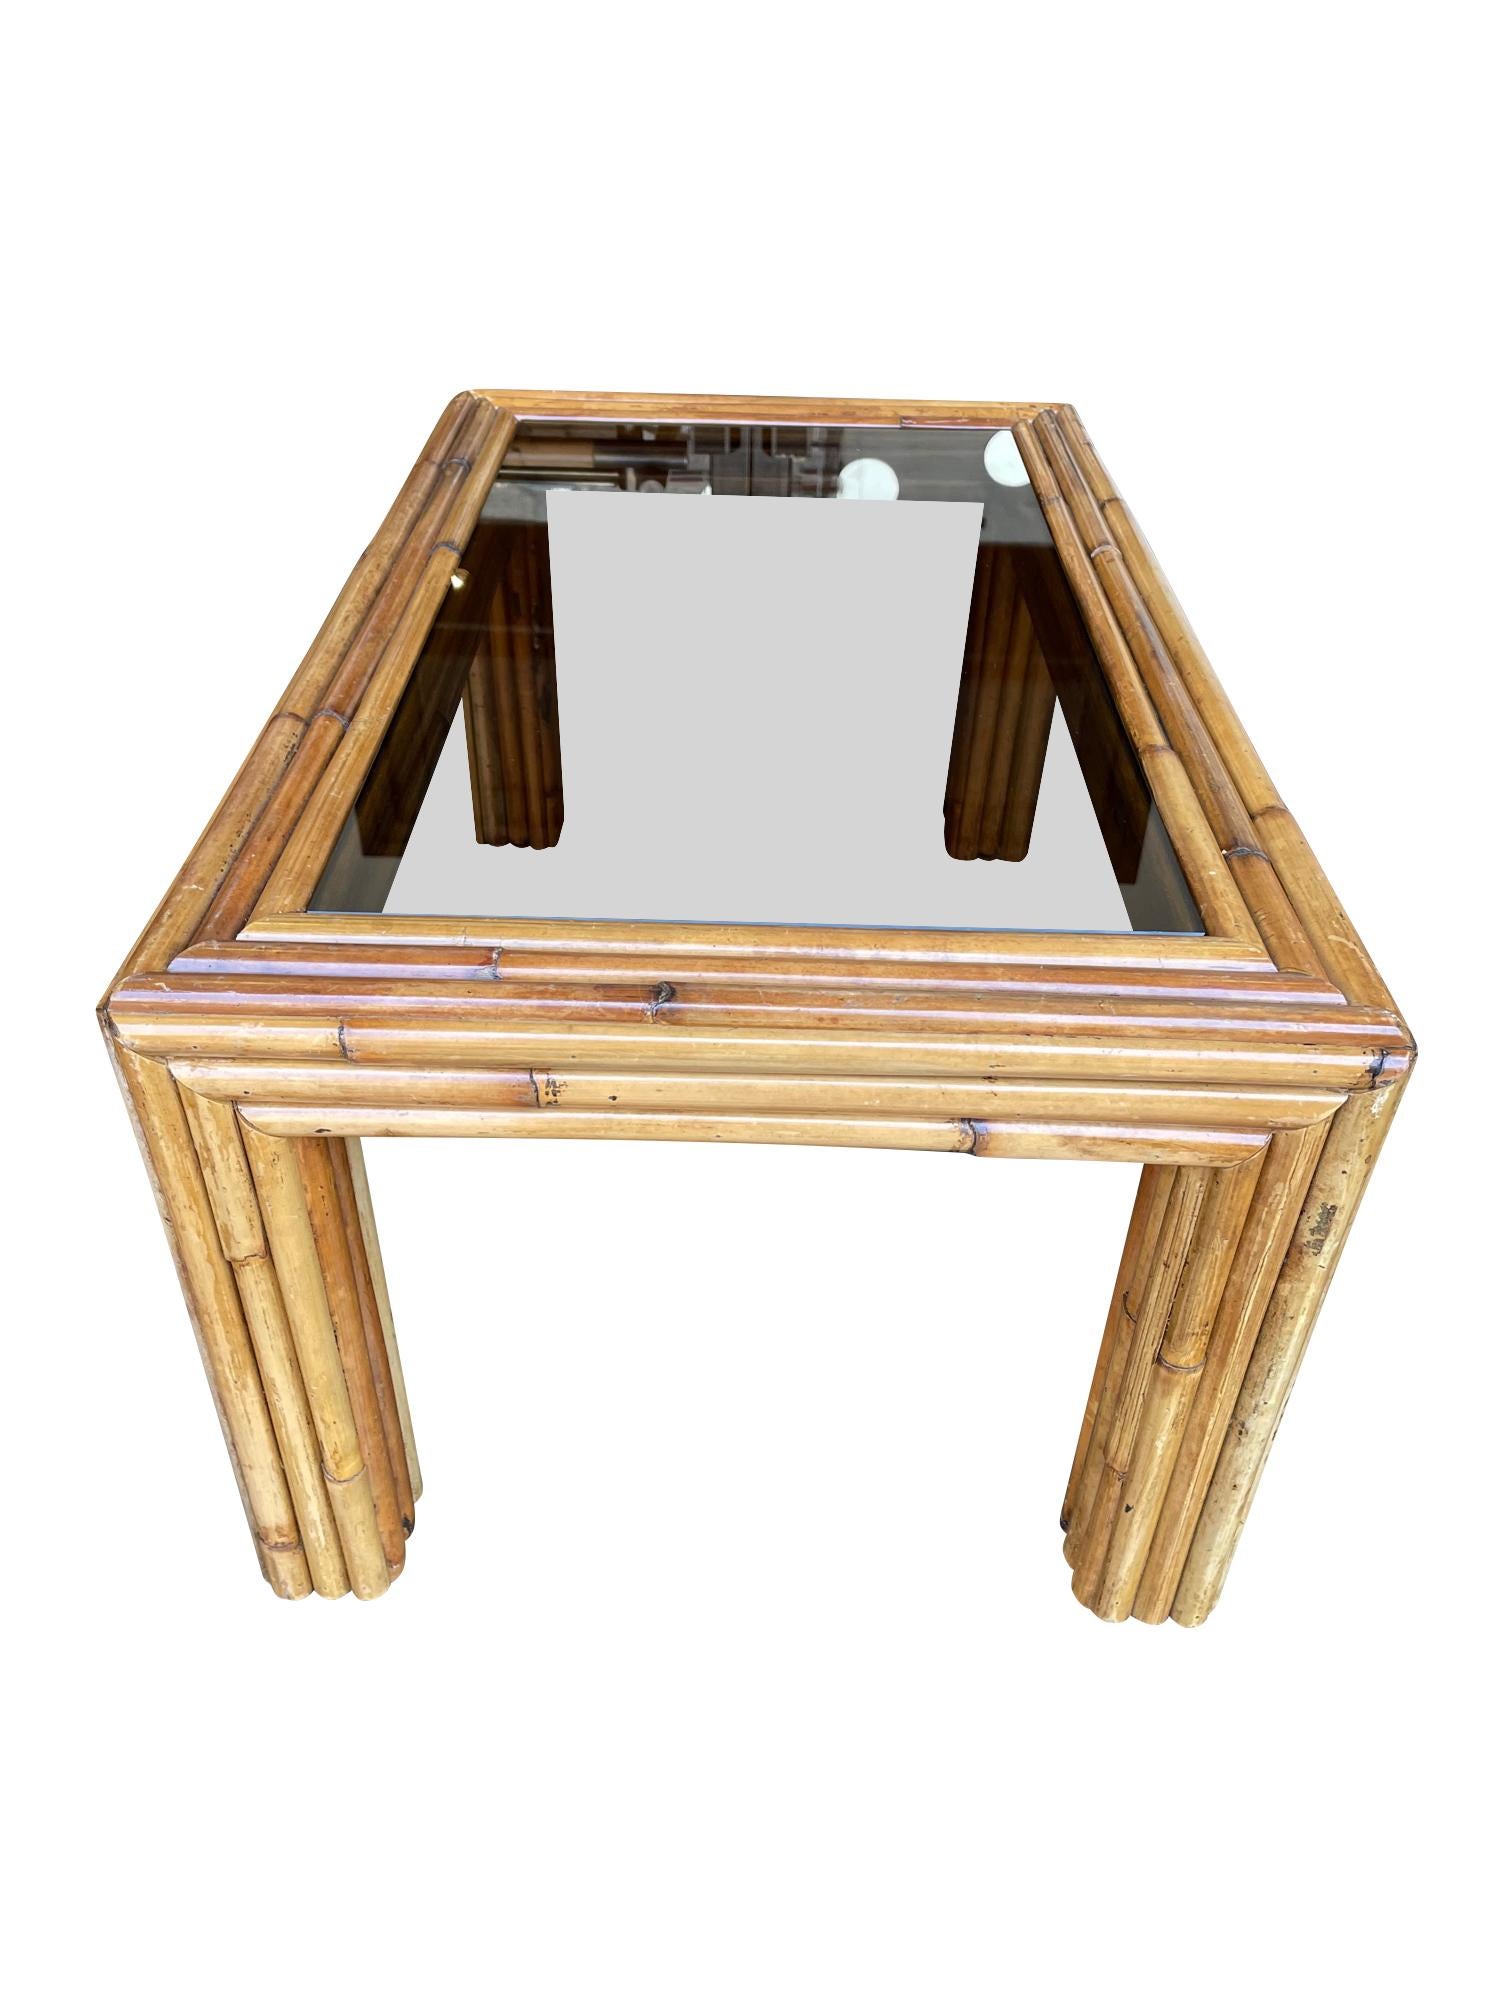 An Italian 1970s bamboo coffee table with original smoked glass top.